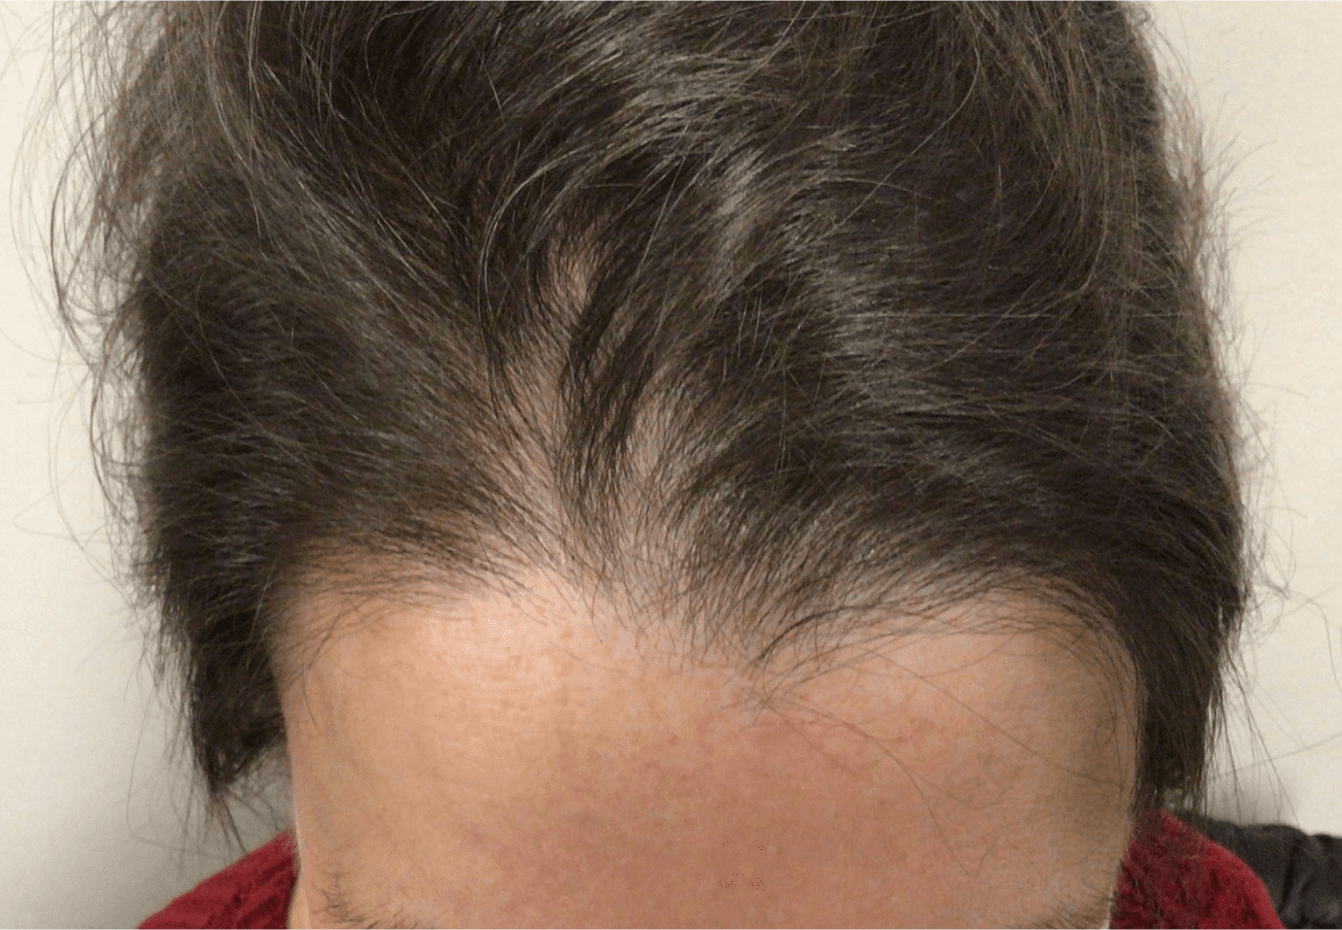 Hair after dermatology treatment